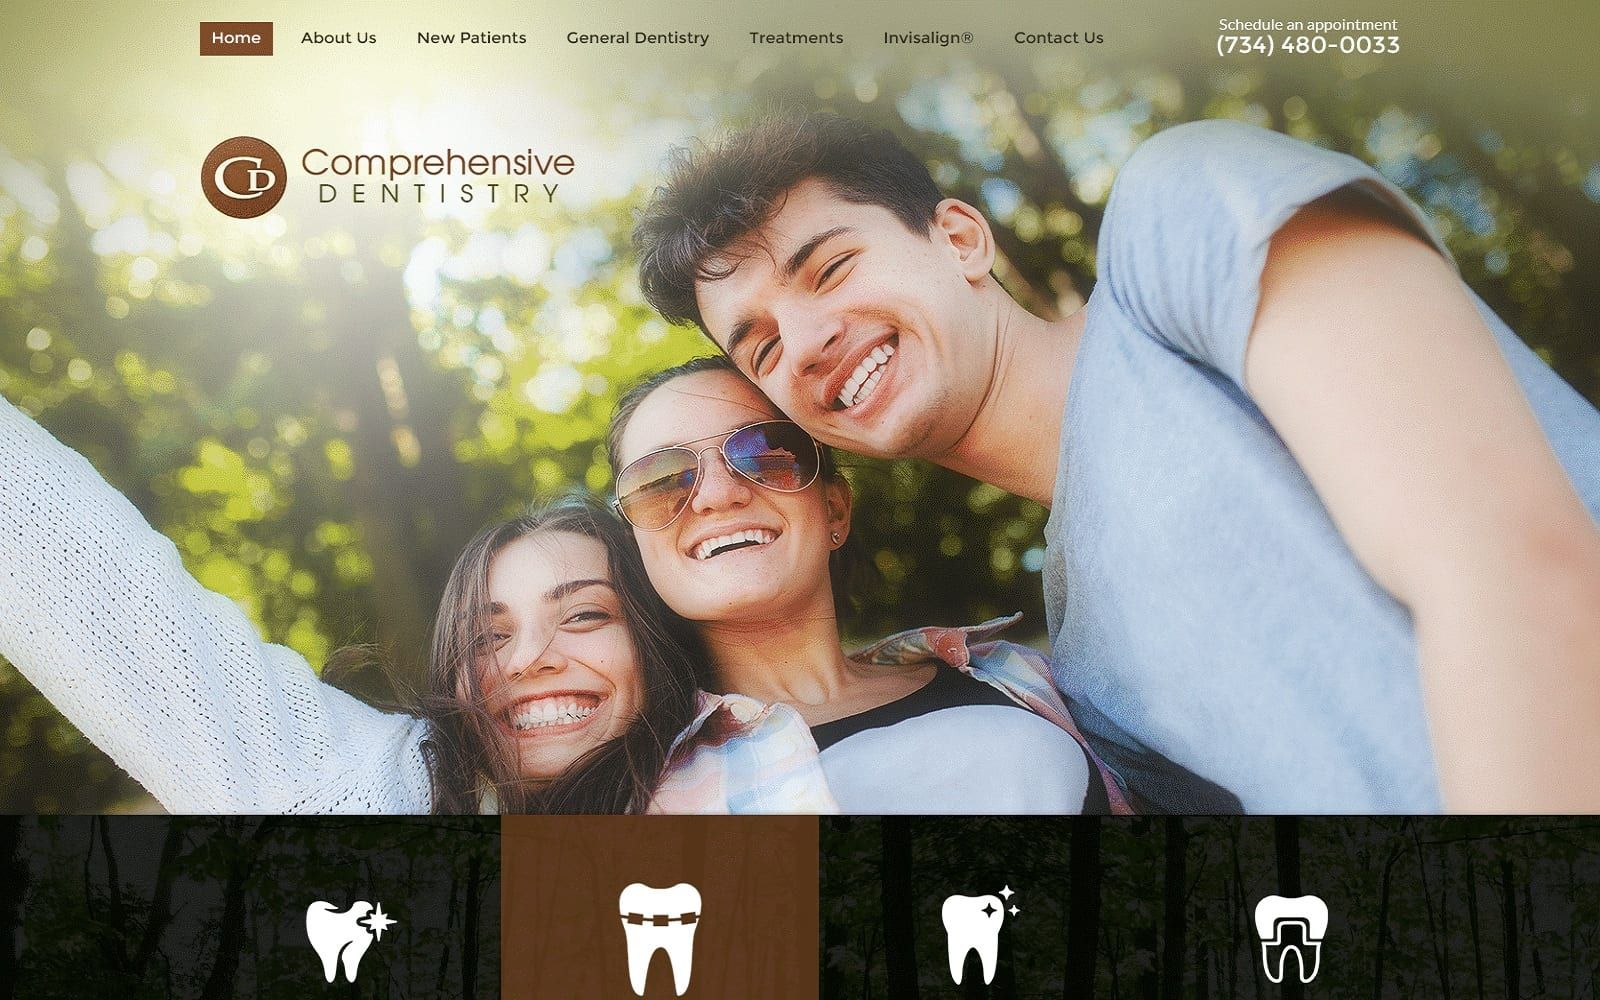 Comprehensive Dentistry Website Screenshot1